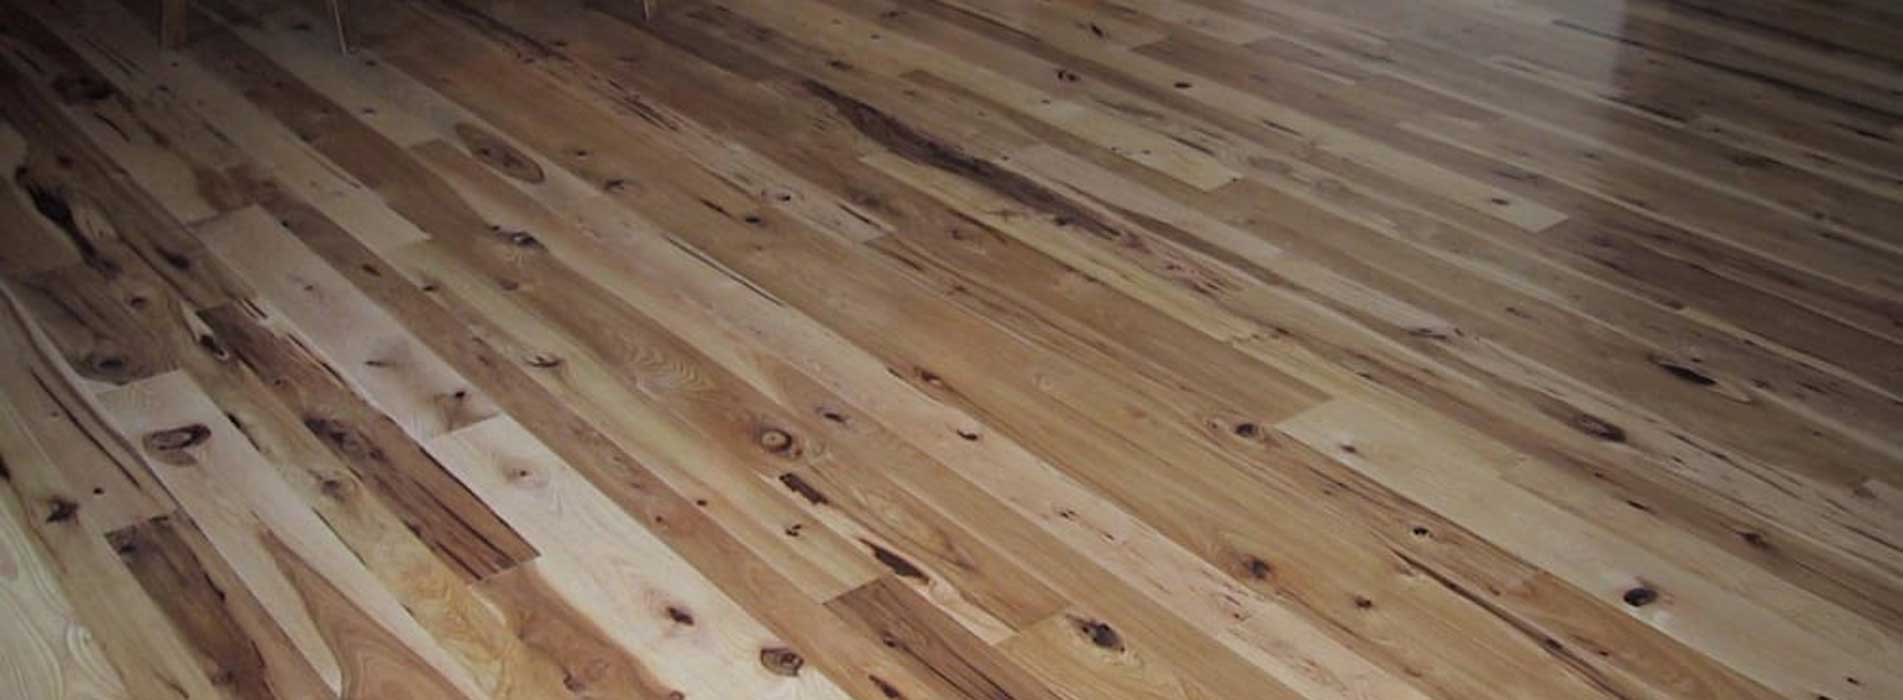 Hickory floor